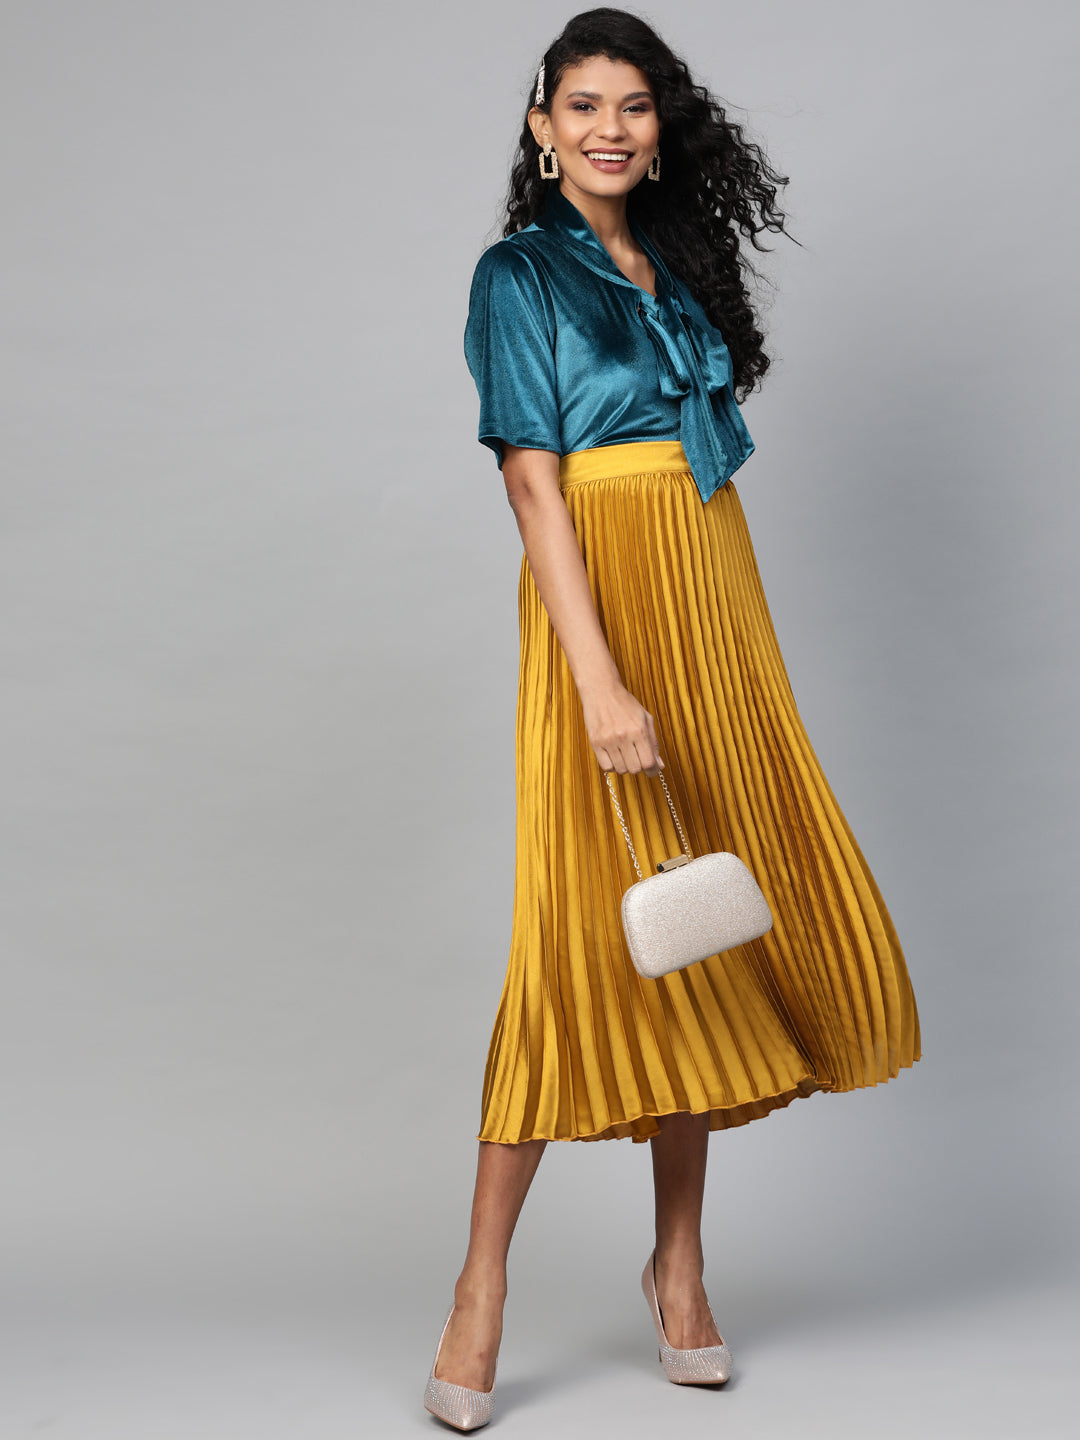 Buy HERIJA Black top with Yellow Flared Skirt for Women and Girls at  Amazonin